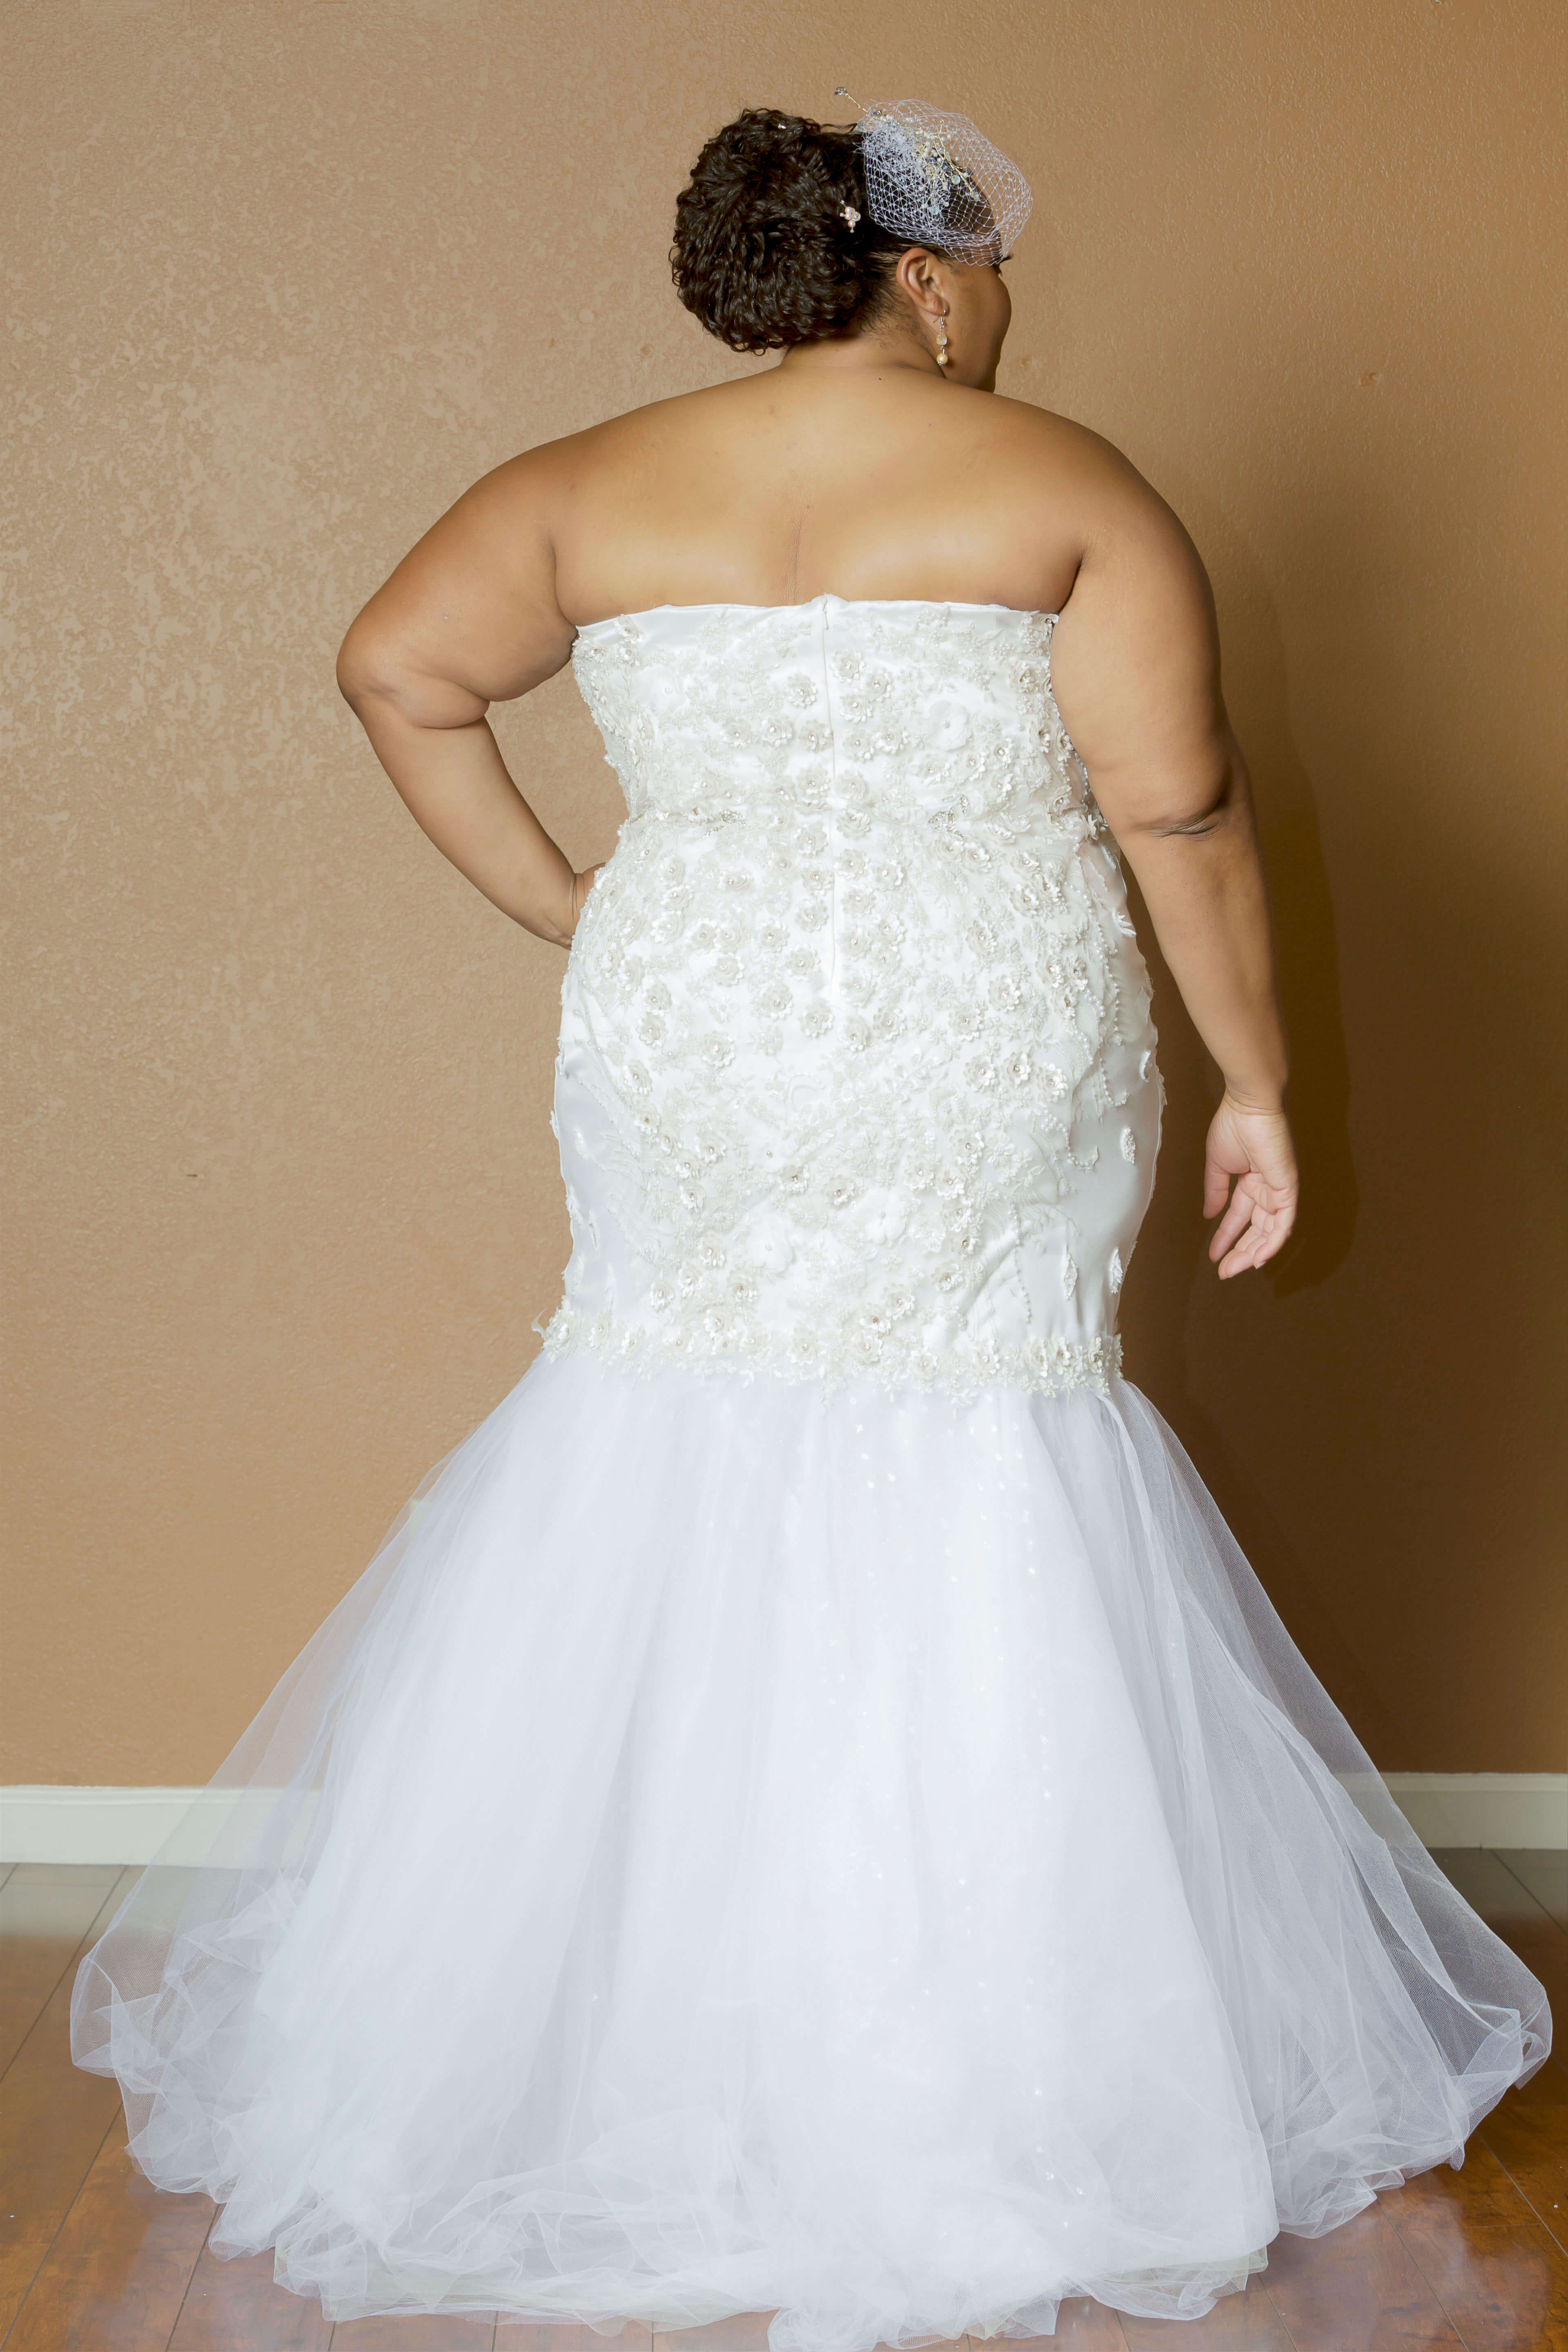 Full Figure Wedding Dresses Top 10 full figure wedding dresses - Find ...